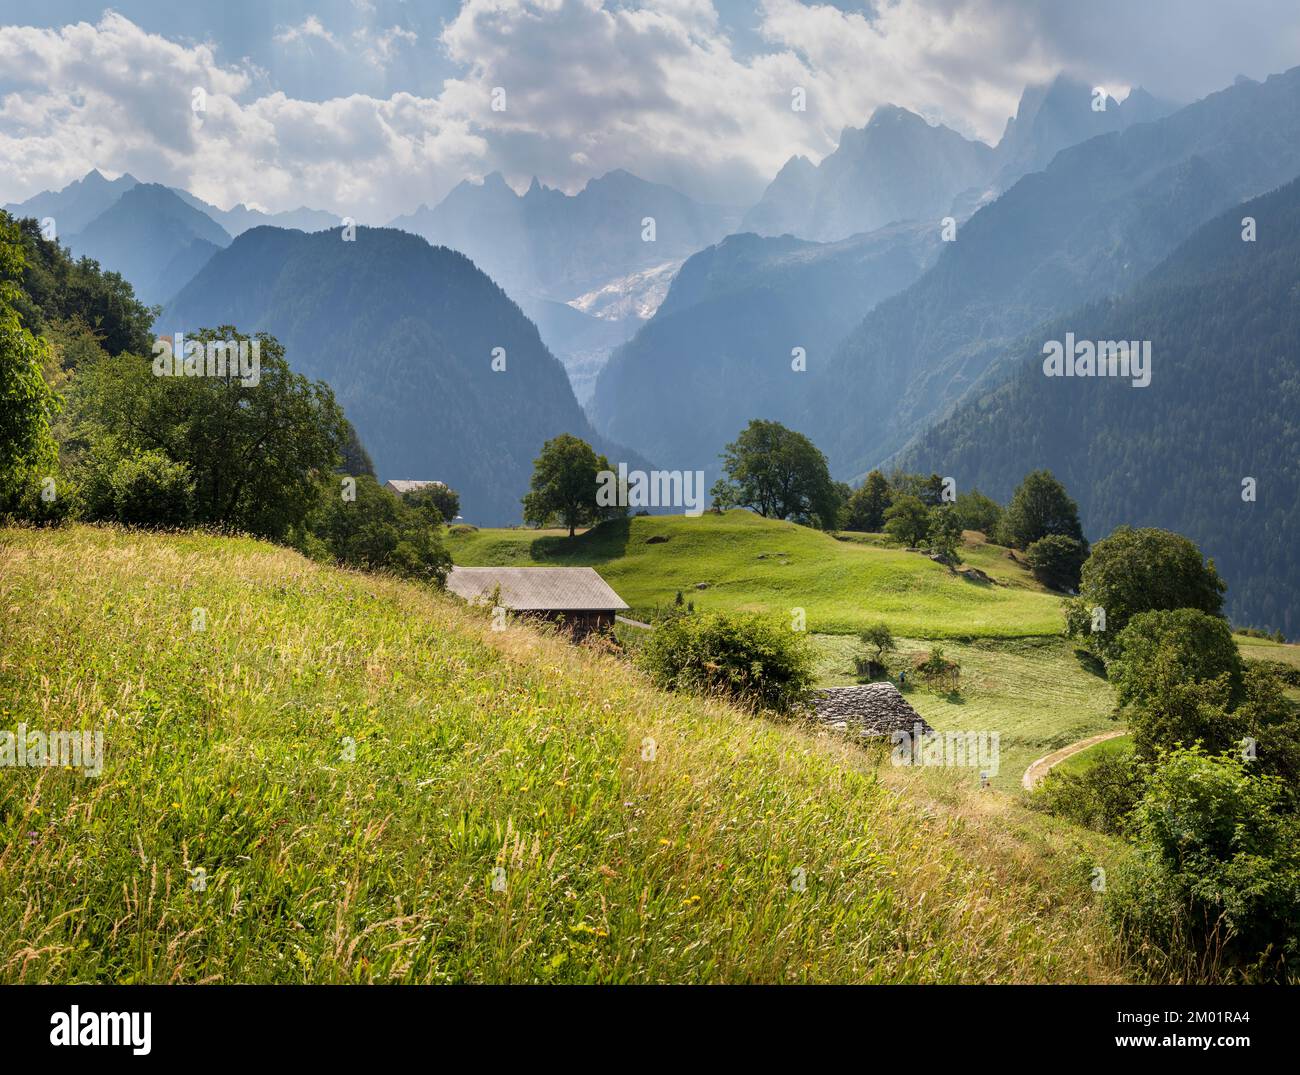 The Piz Badile, Pizzo Cengalo, and Sciora peaks in the Bregaglia range - Switzerland. Stock Photo